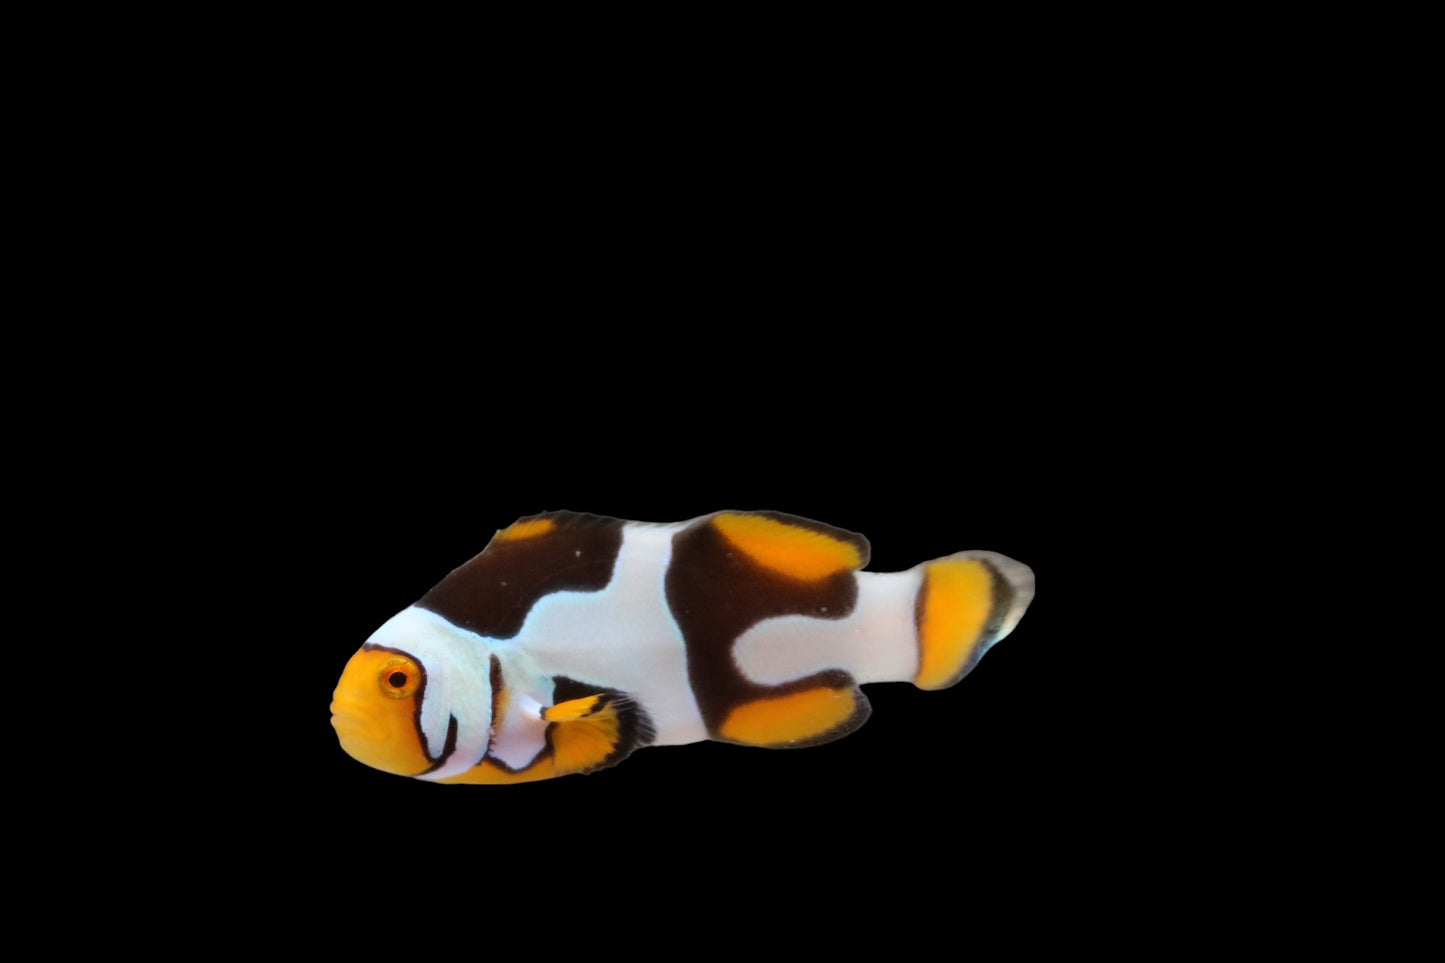 Single Extreme Onyx Picasso Clownfish Ref# C9